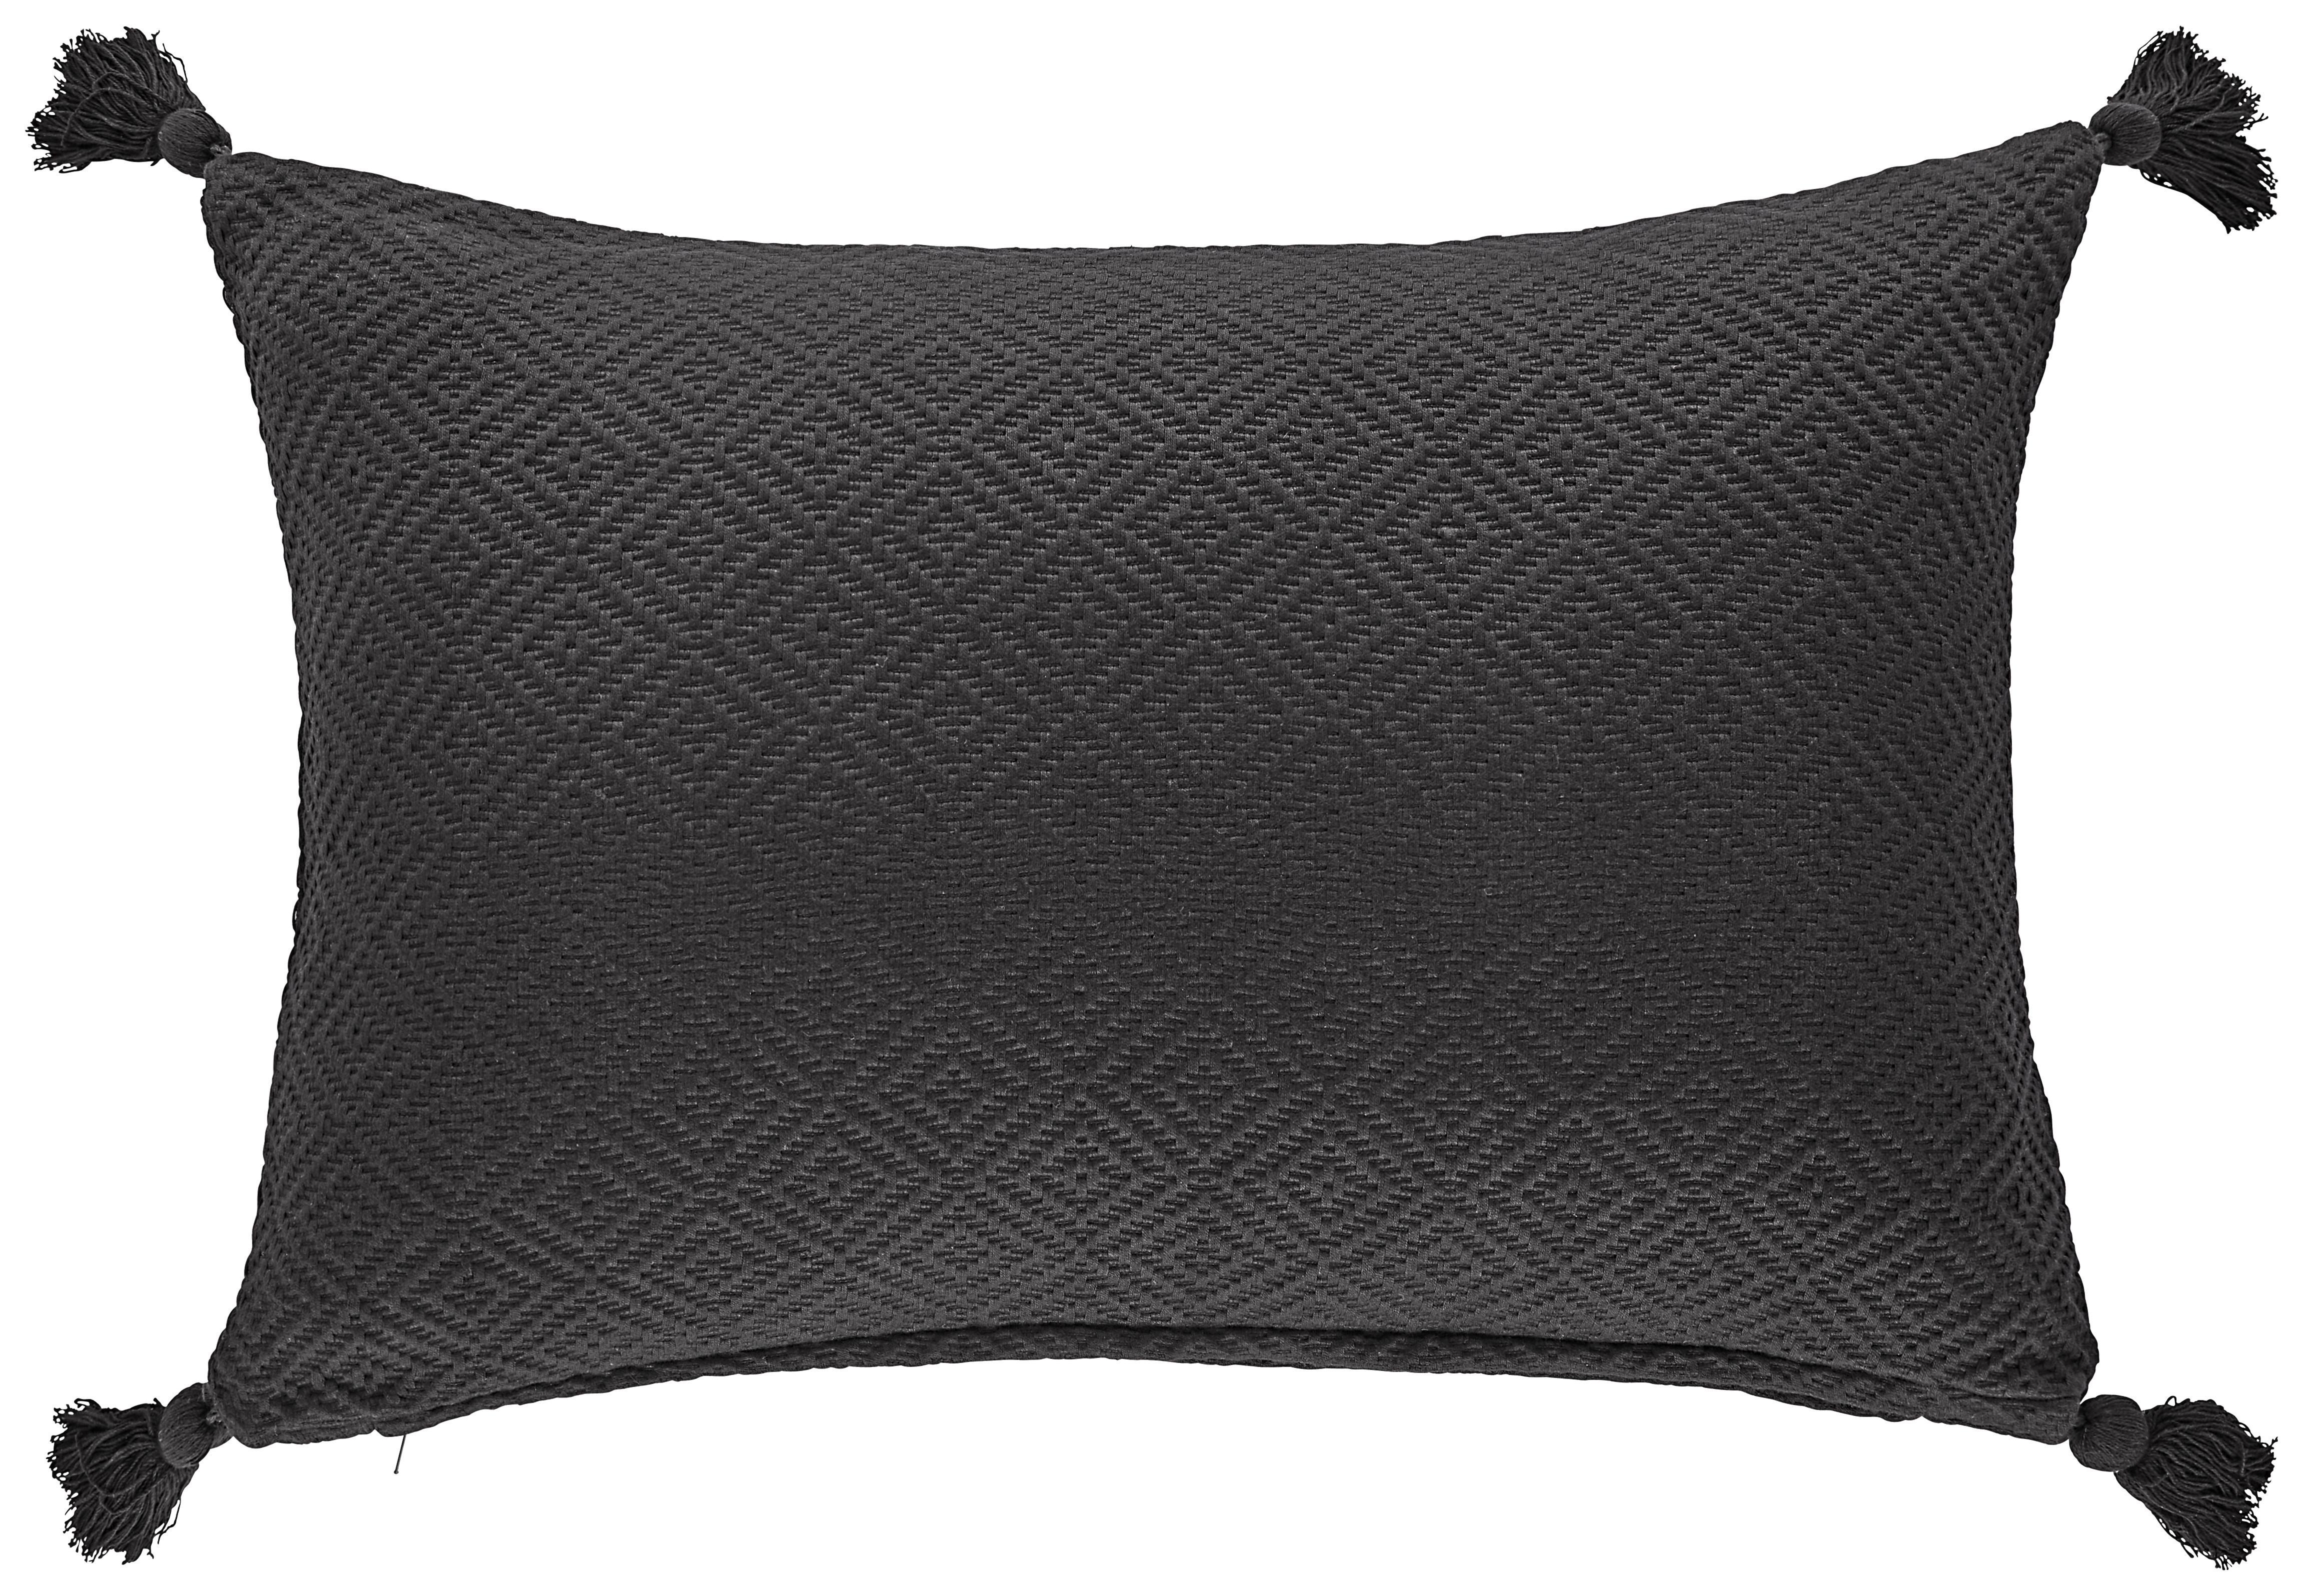 Pernă decorativă Frieda - negru, Lifestyle, textil (40/60cm) - Modern Living